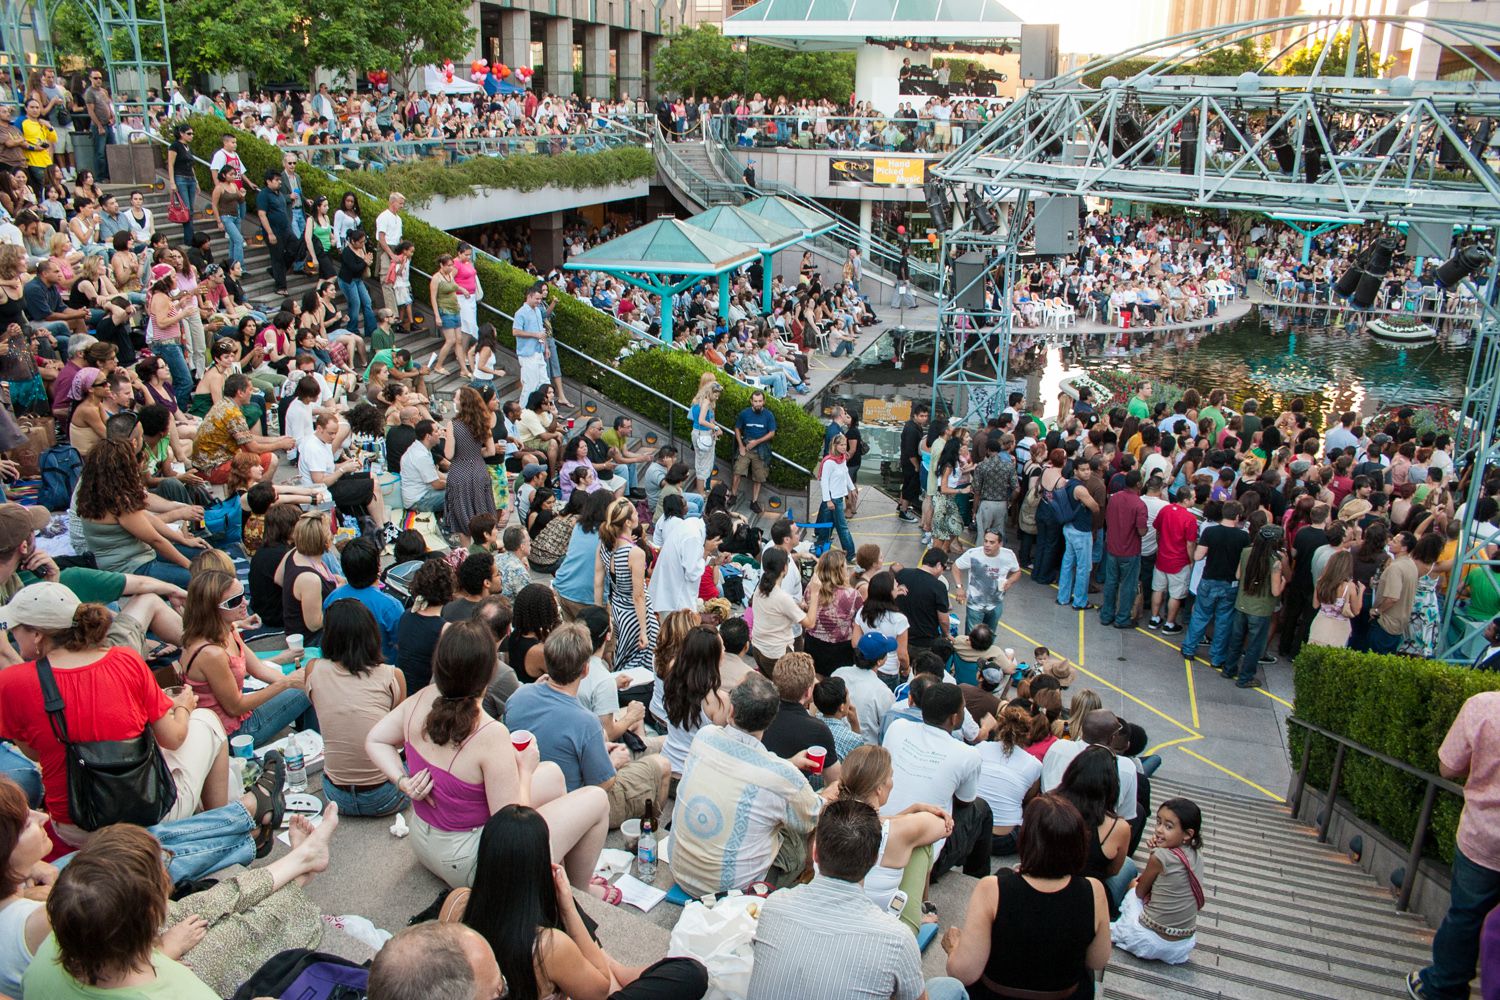 Grand Performances Free Summer Concerts at California Plaza